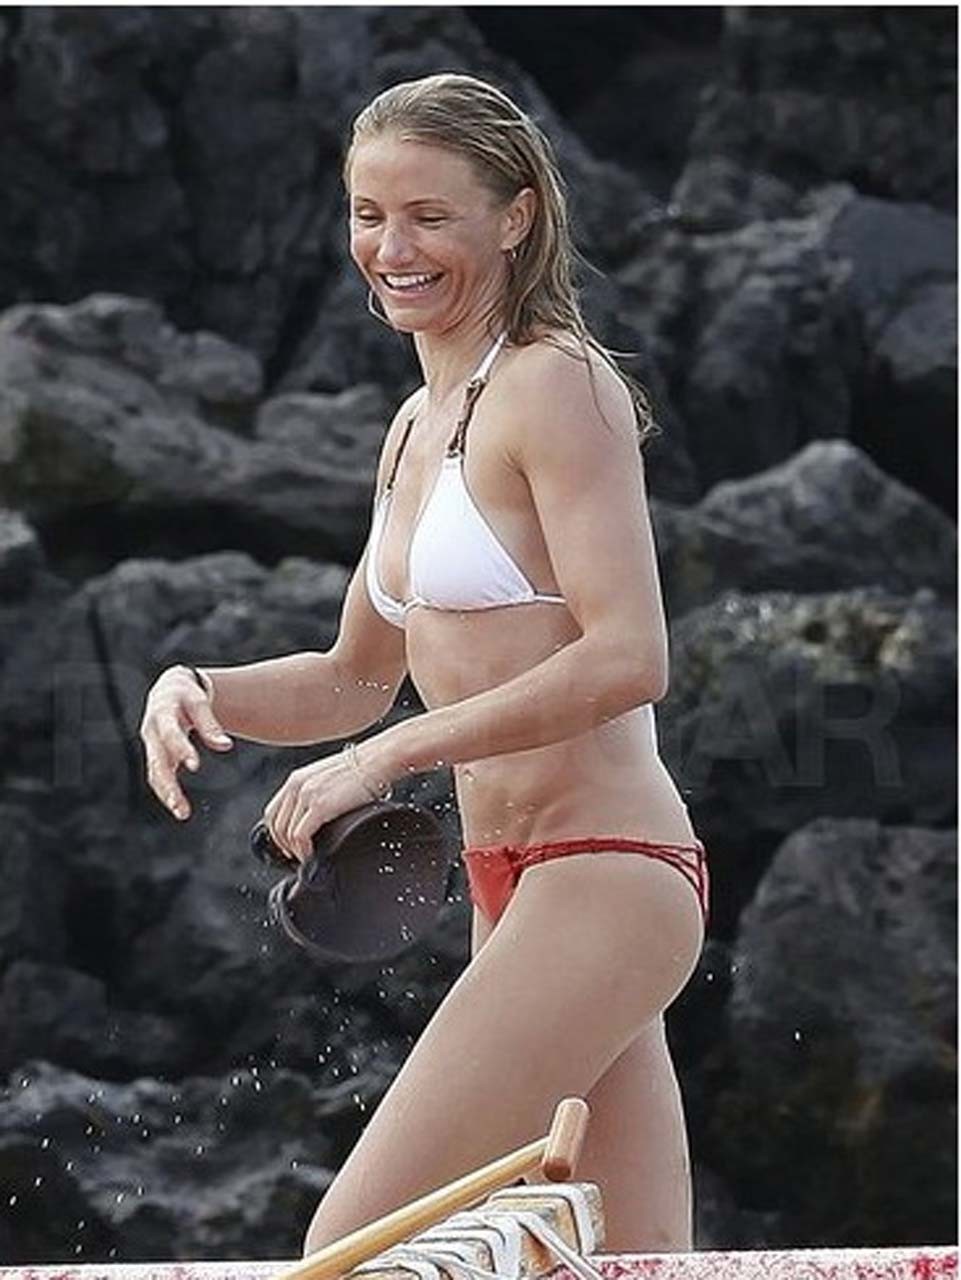 Cameron Diaz exposing her nice body on beach in bikini paparazzi pictures #75318396